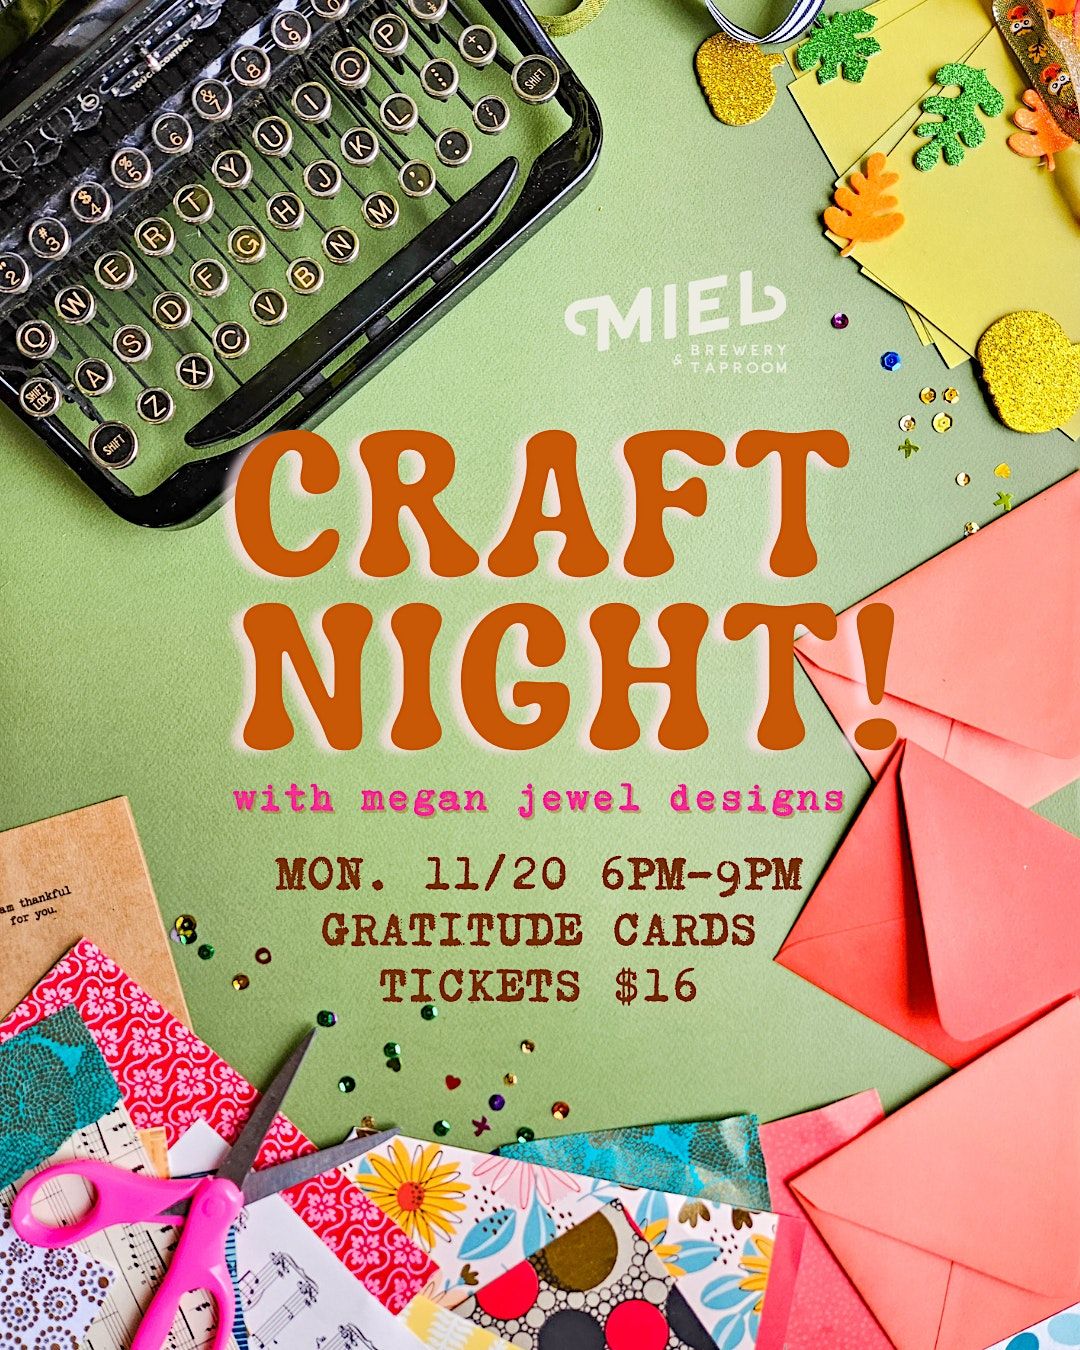 Craft Night! DIY Gratitude Cards with Megan Jewel Designs at Miel Brewery